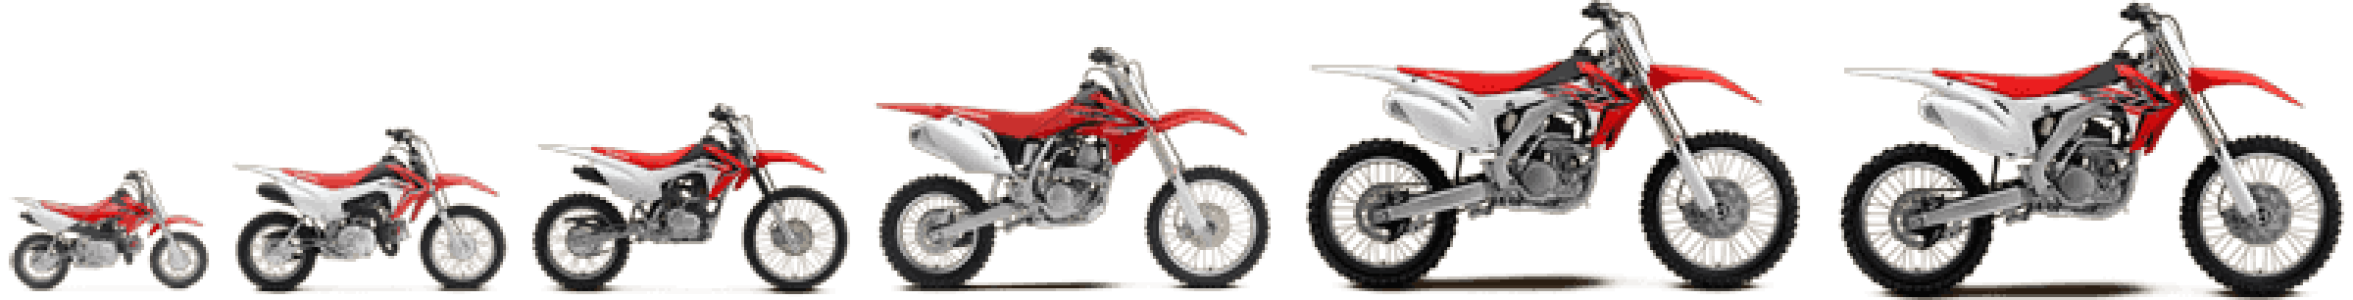 Motocross motorcycle sizes